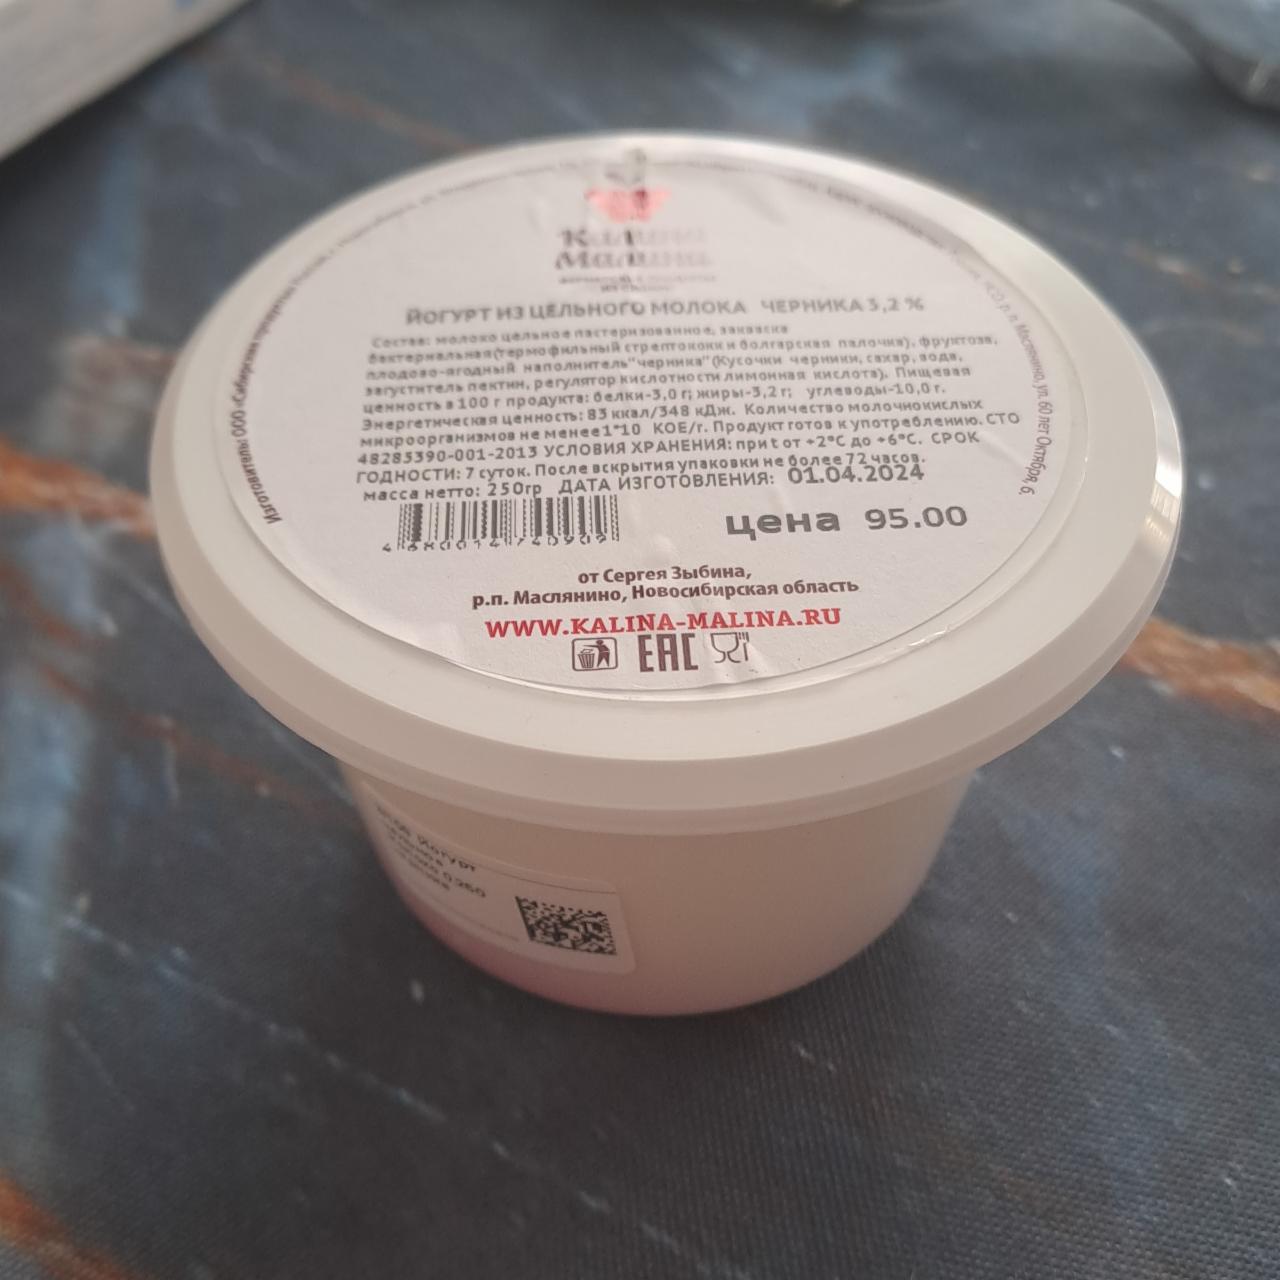 Фото - Йогурт из цельного молока черника 3,2% Калина малина